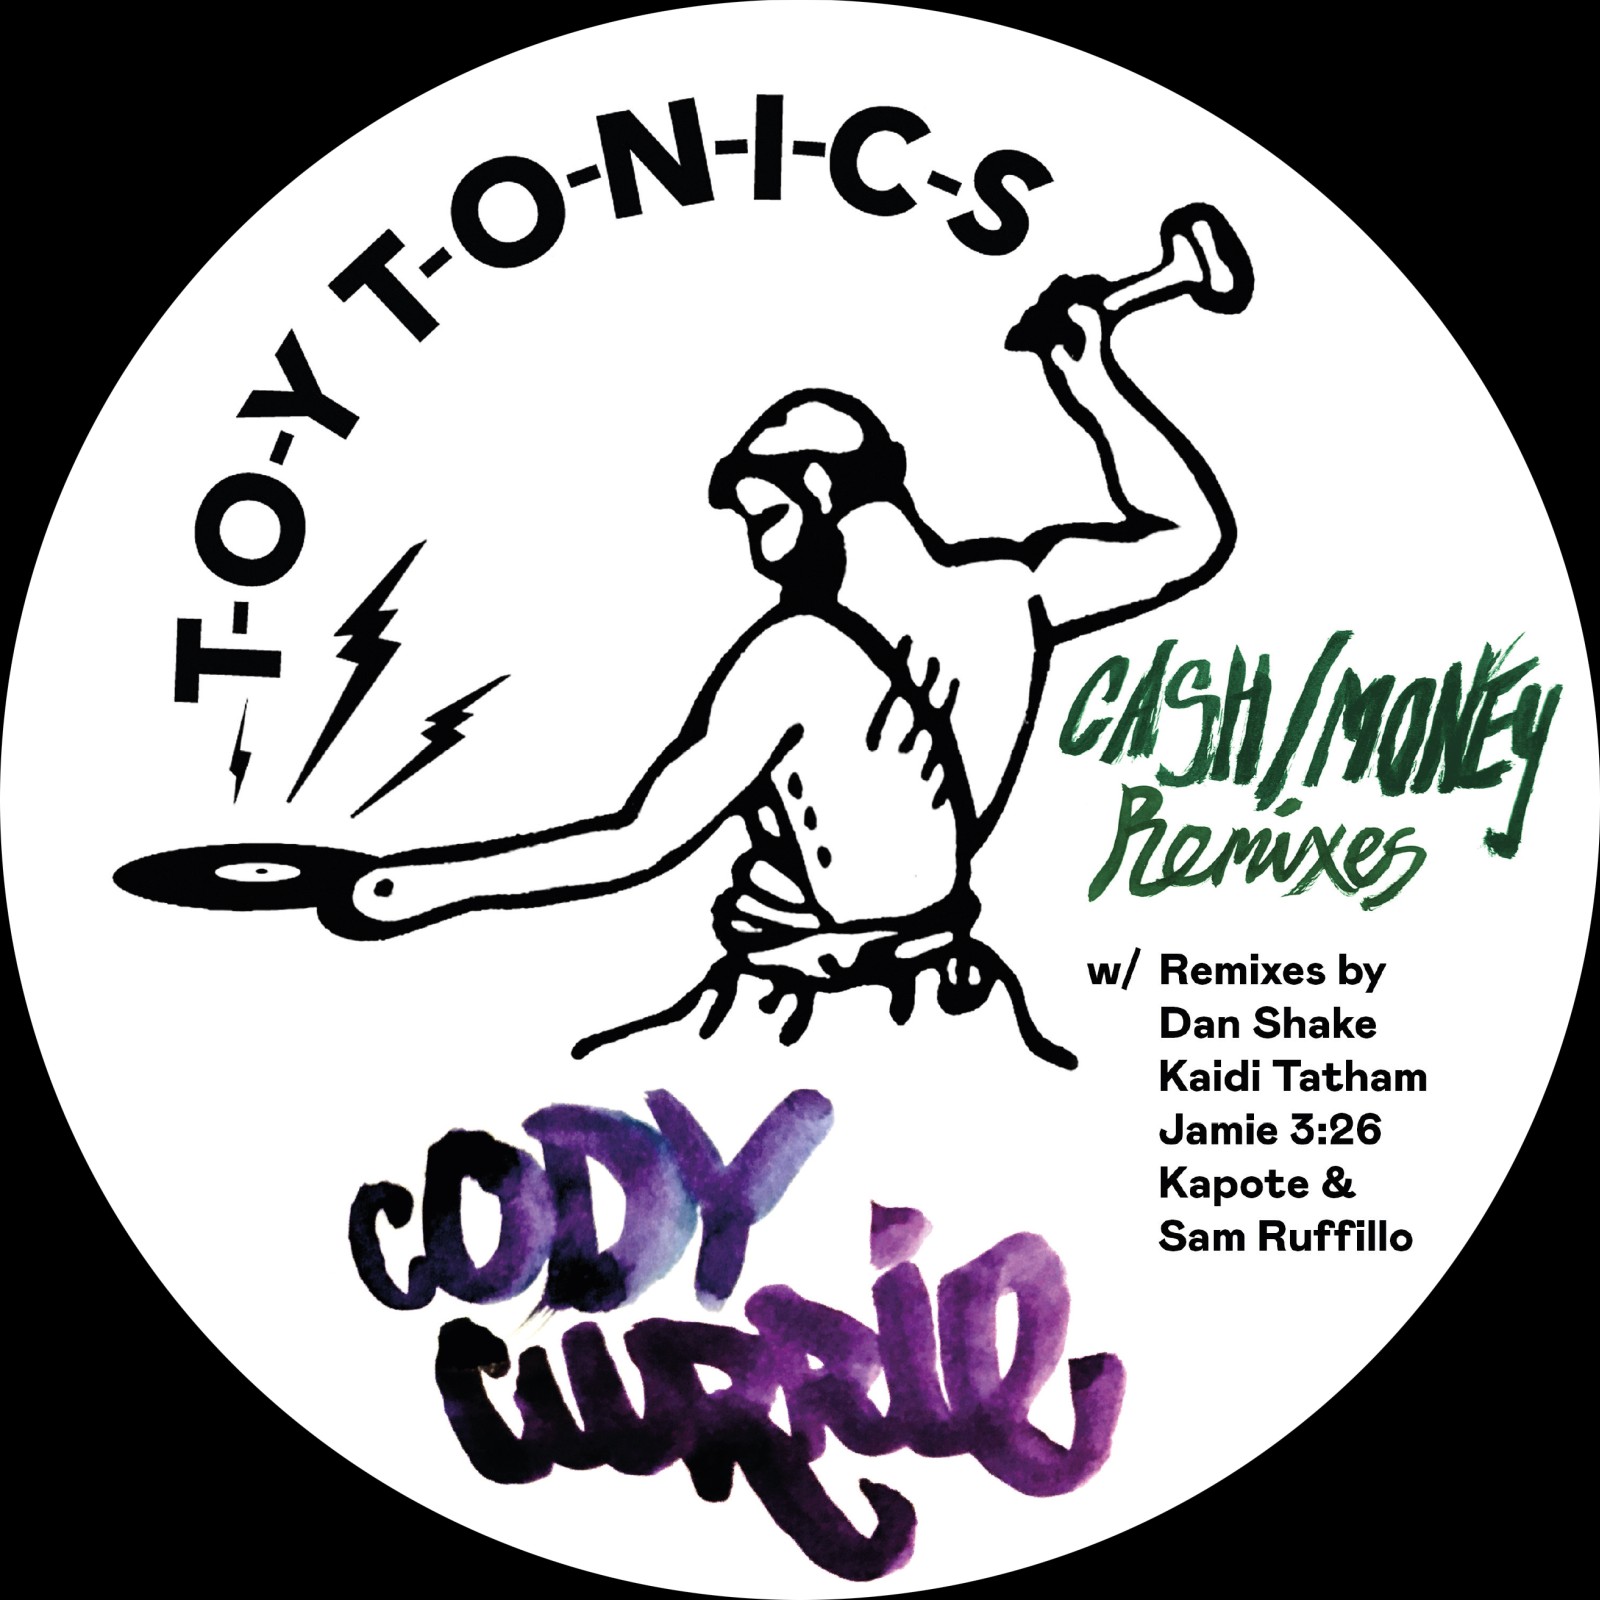 Cody Currie - Cash-Money Remixes [TOYT143]